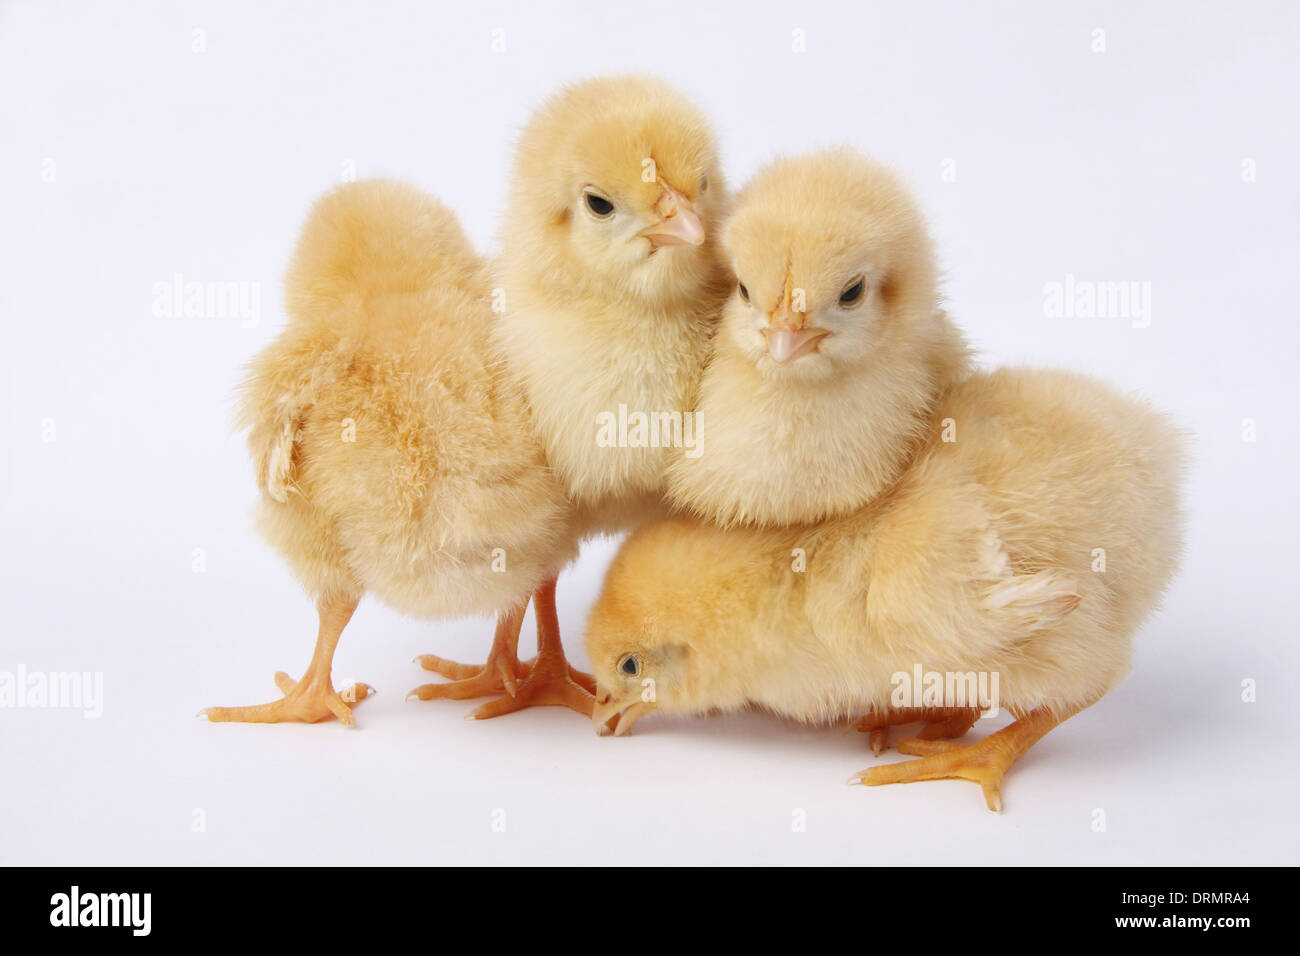 four baby chicks Stock Photo